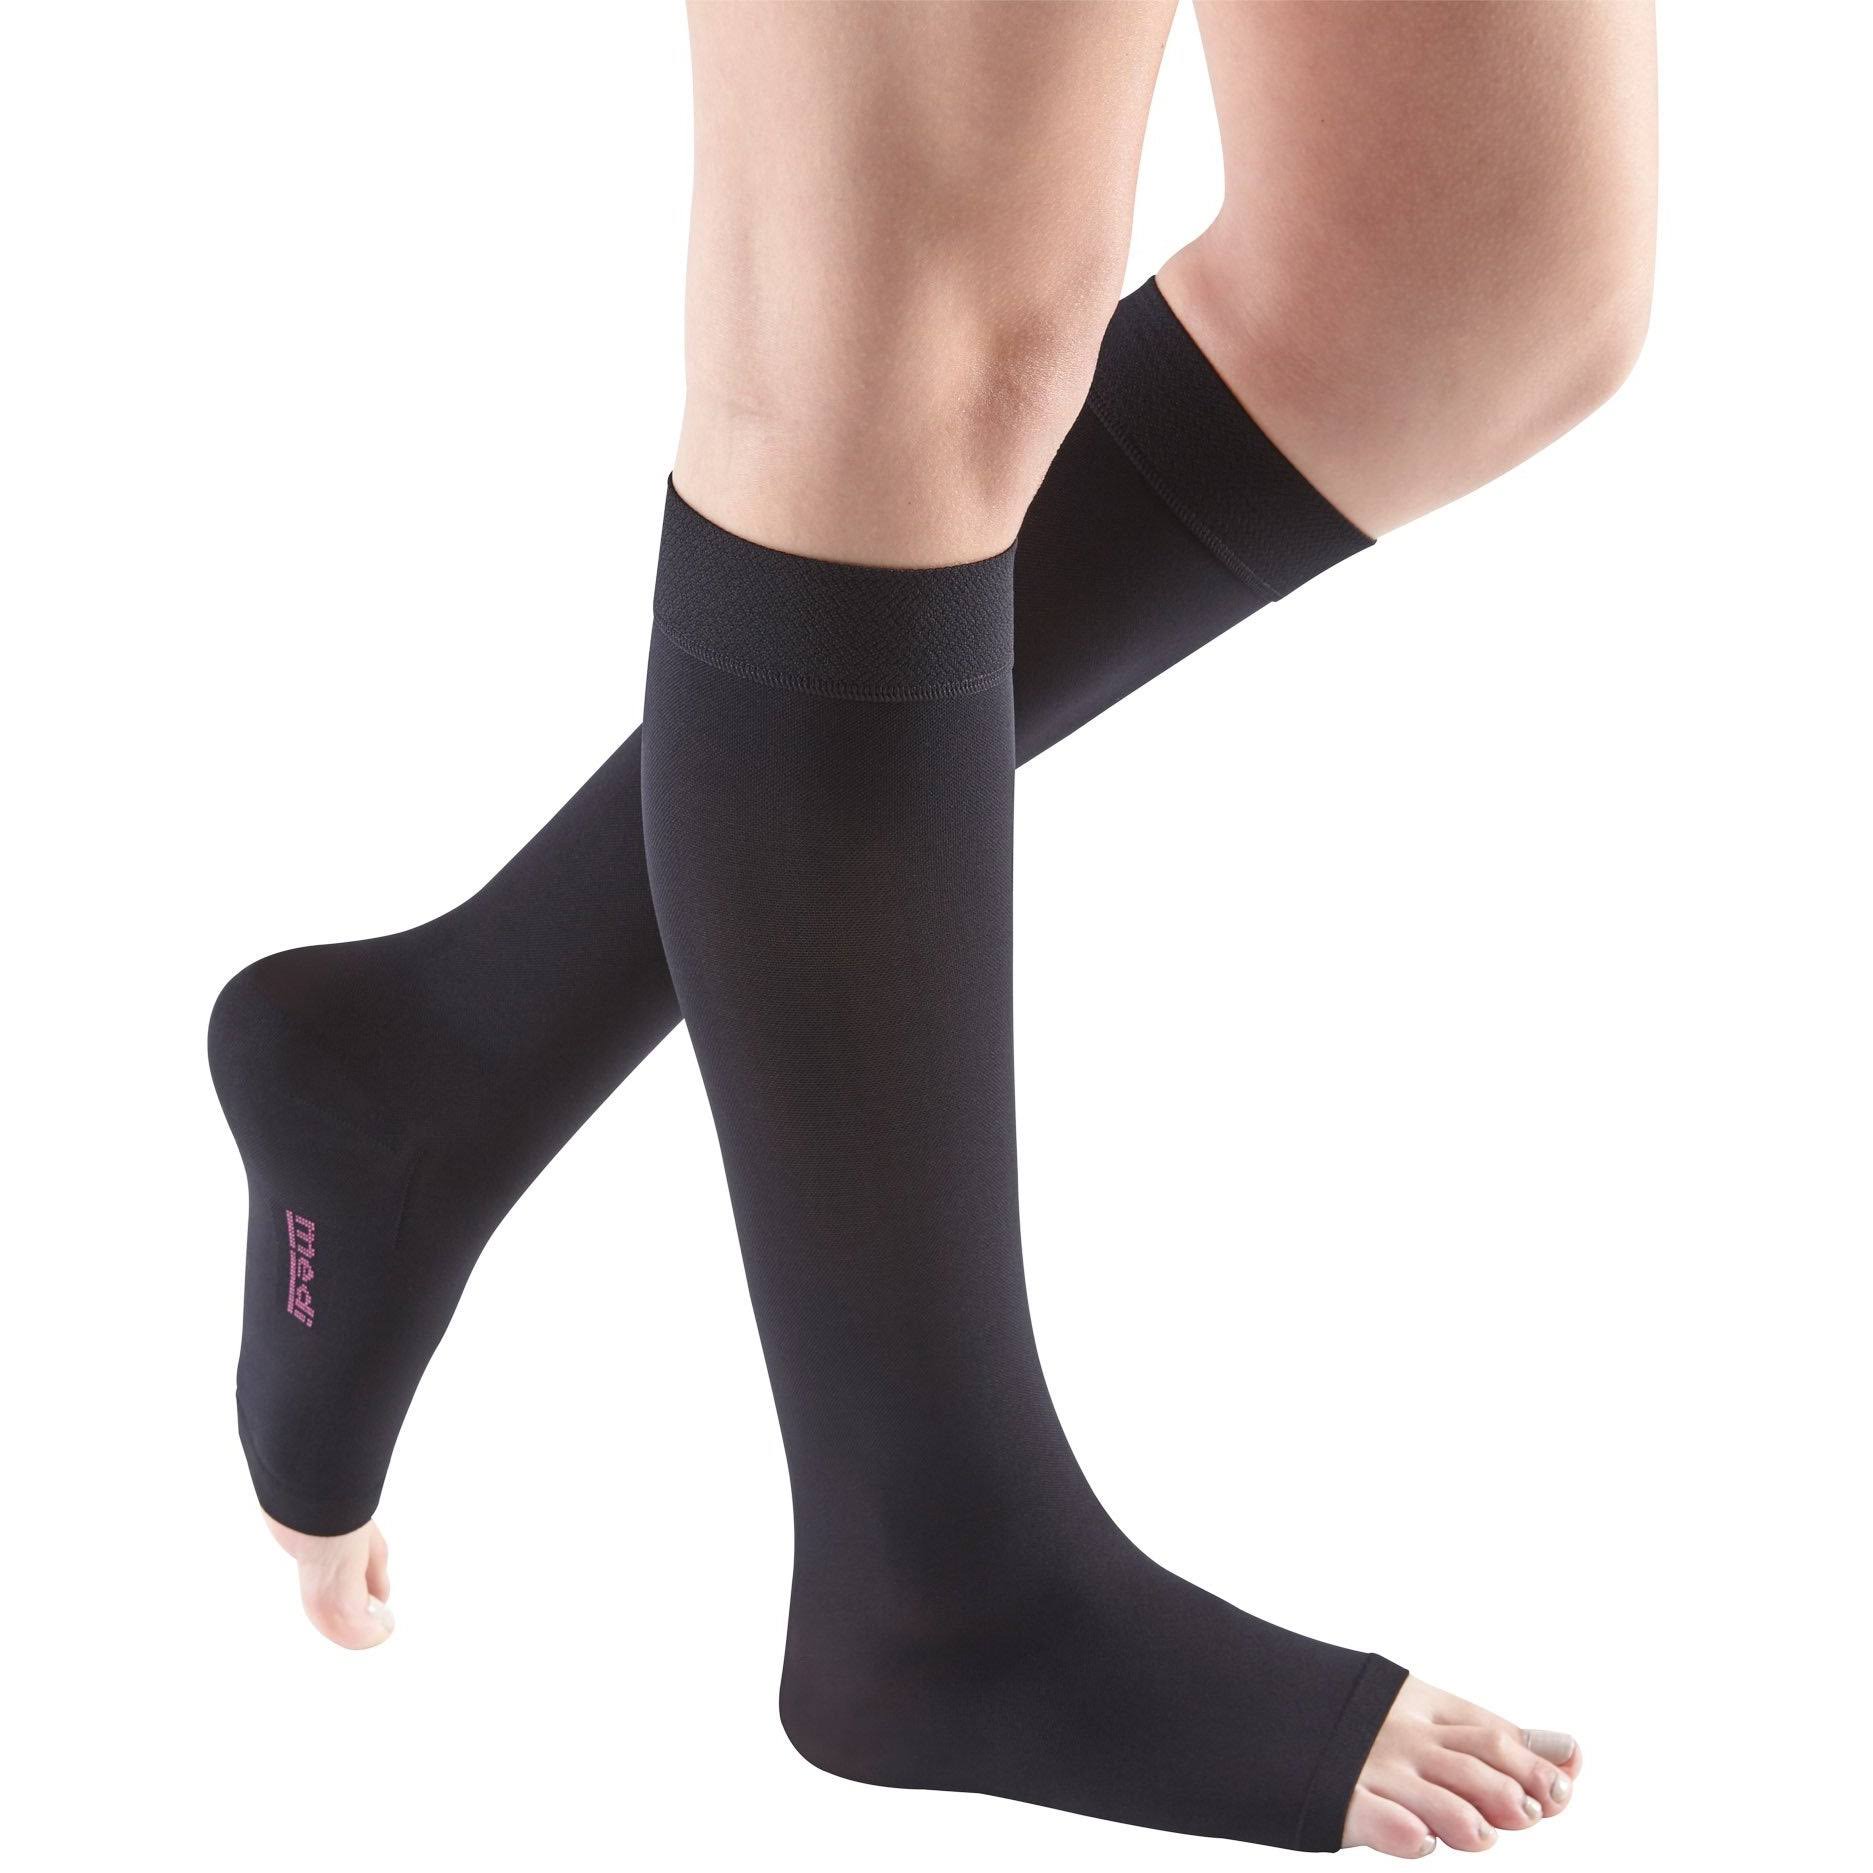 Medi Comfort Knee High Closed Toe Compression Stocking - Natural, 20-30mmhg